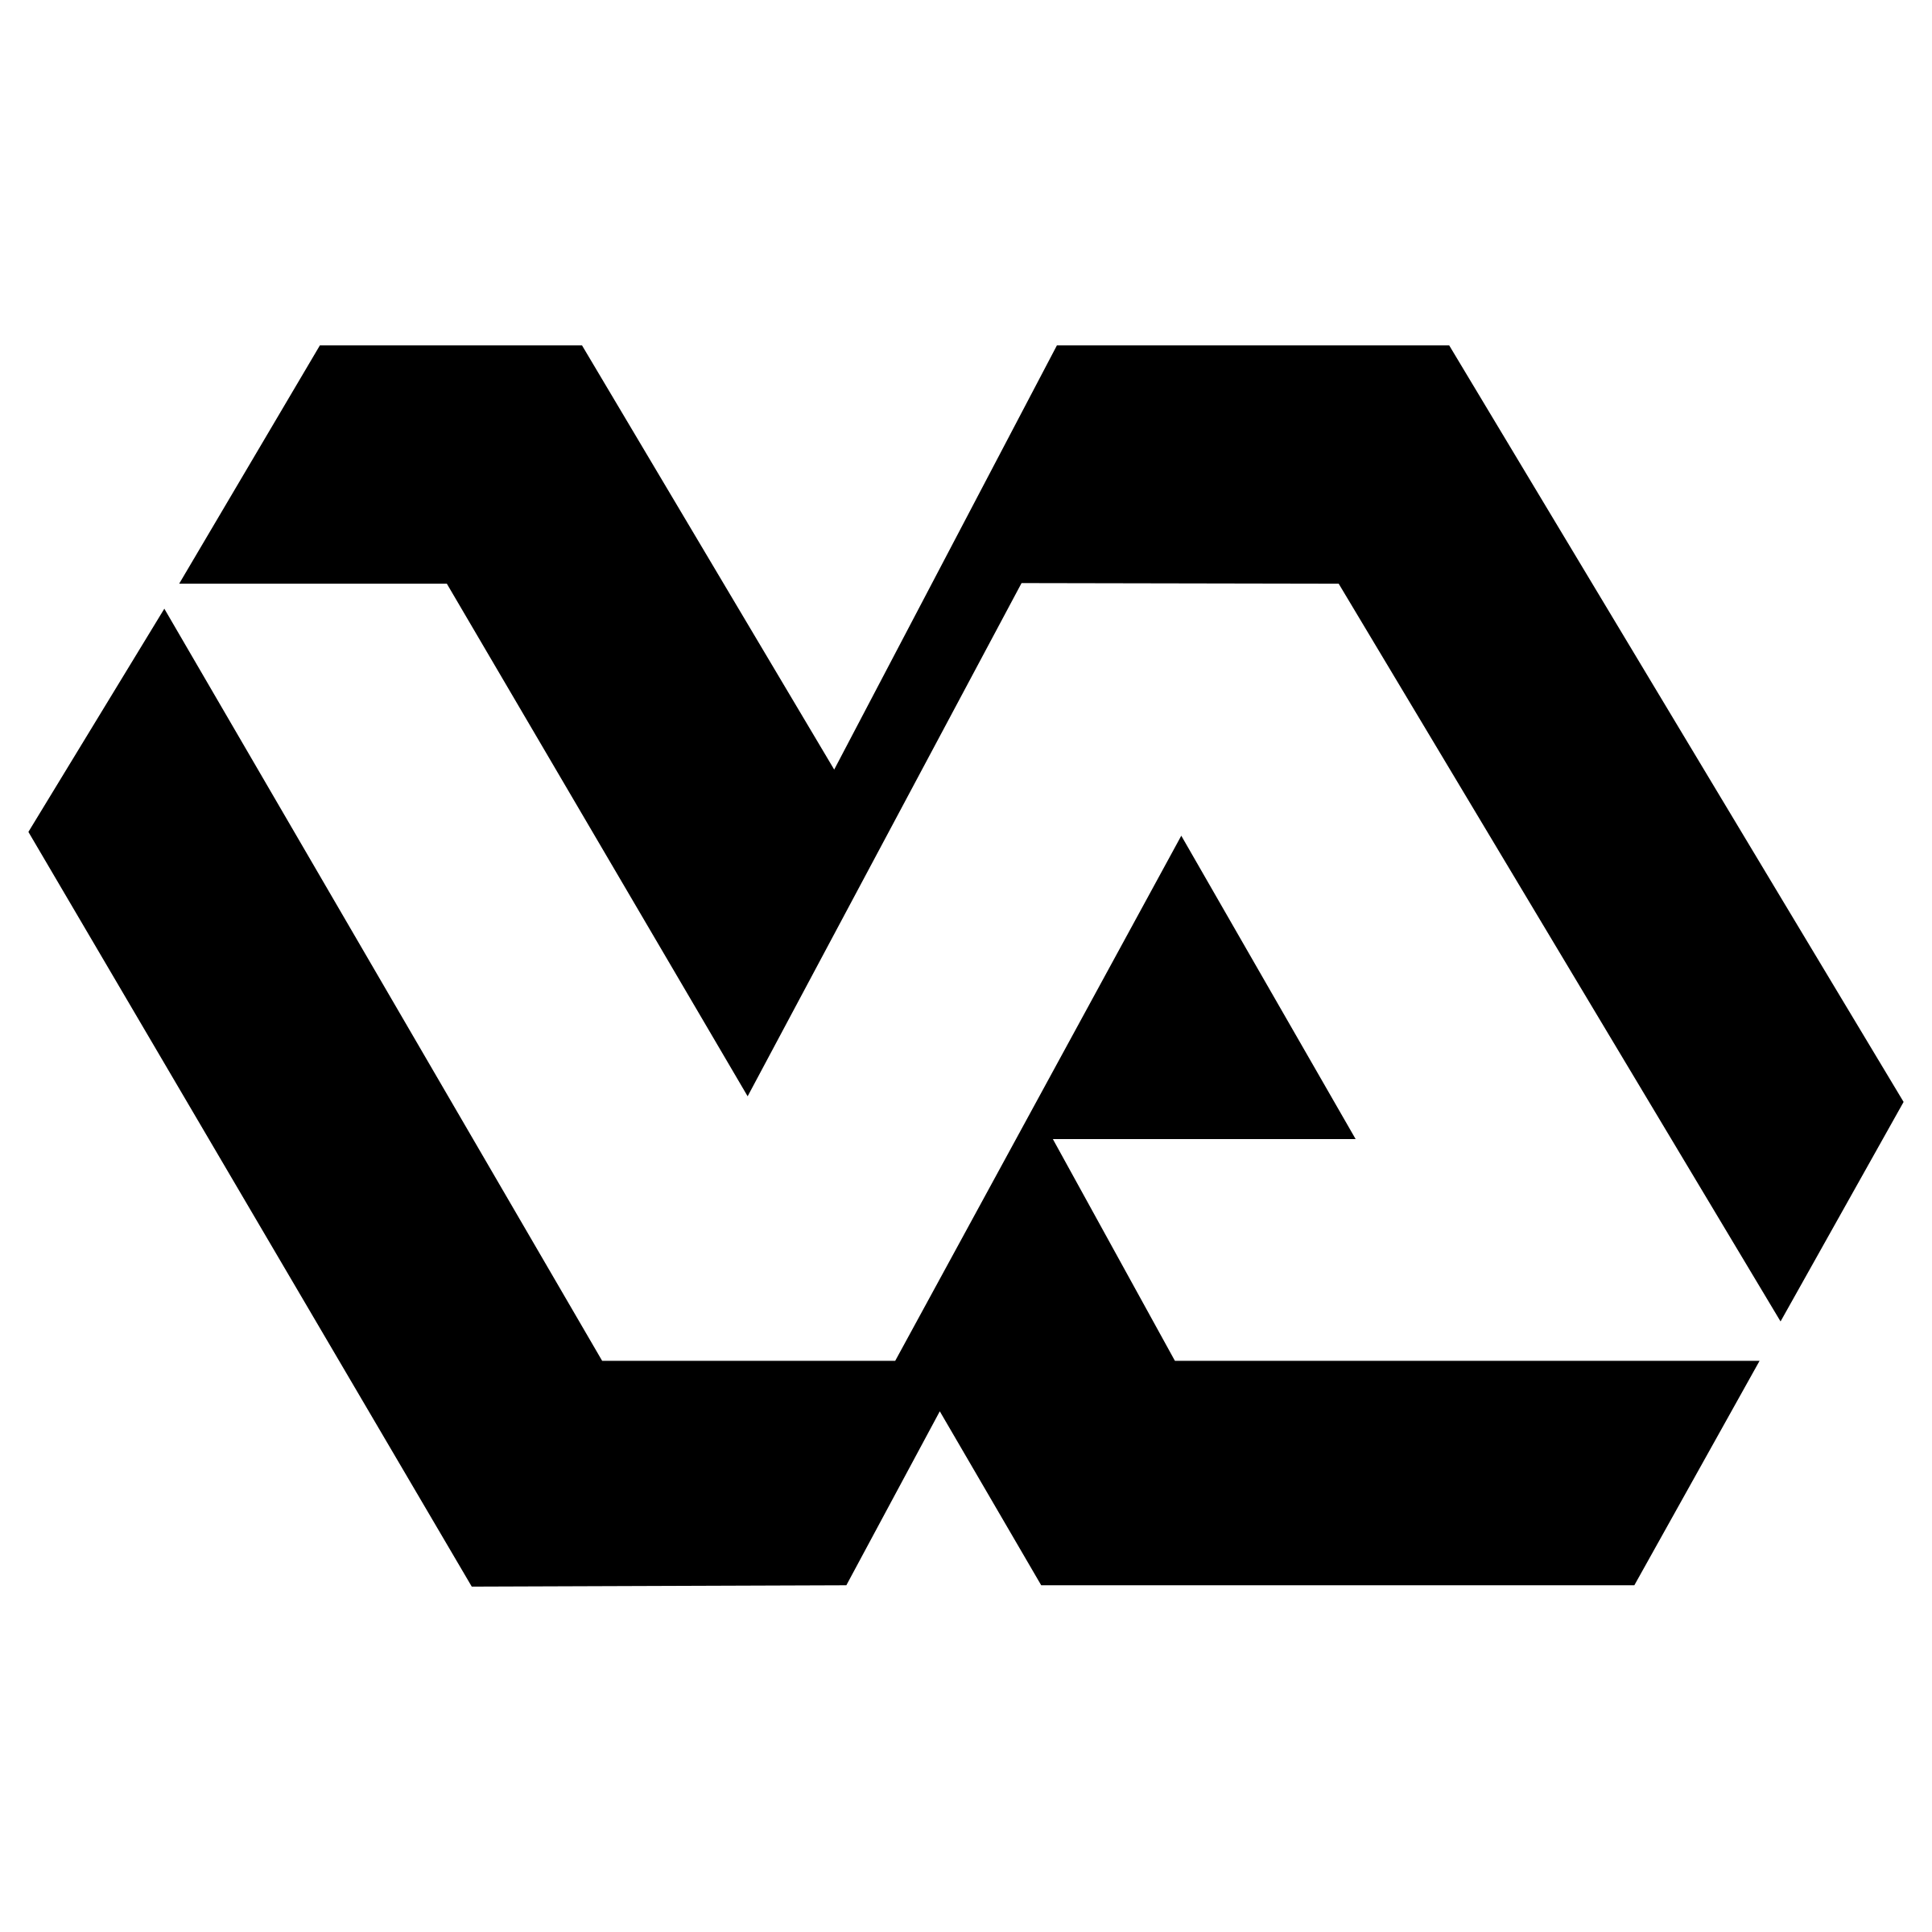 Administration Logo - Veterans Administration Logo PNG Transparent & SVG Vector - Freebie ...